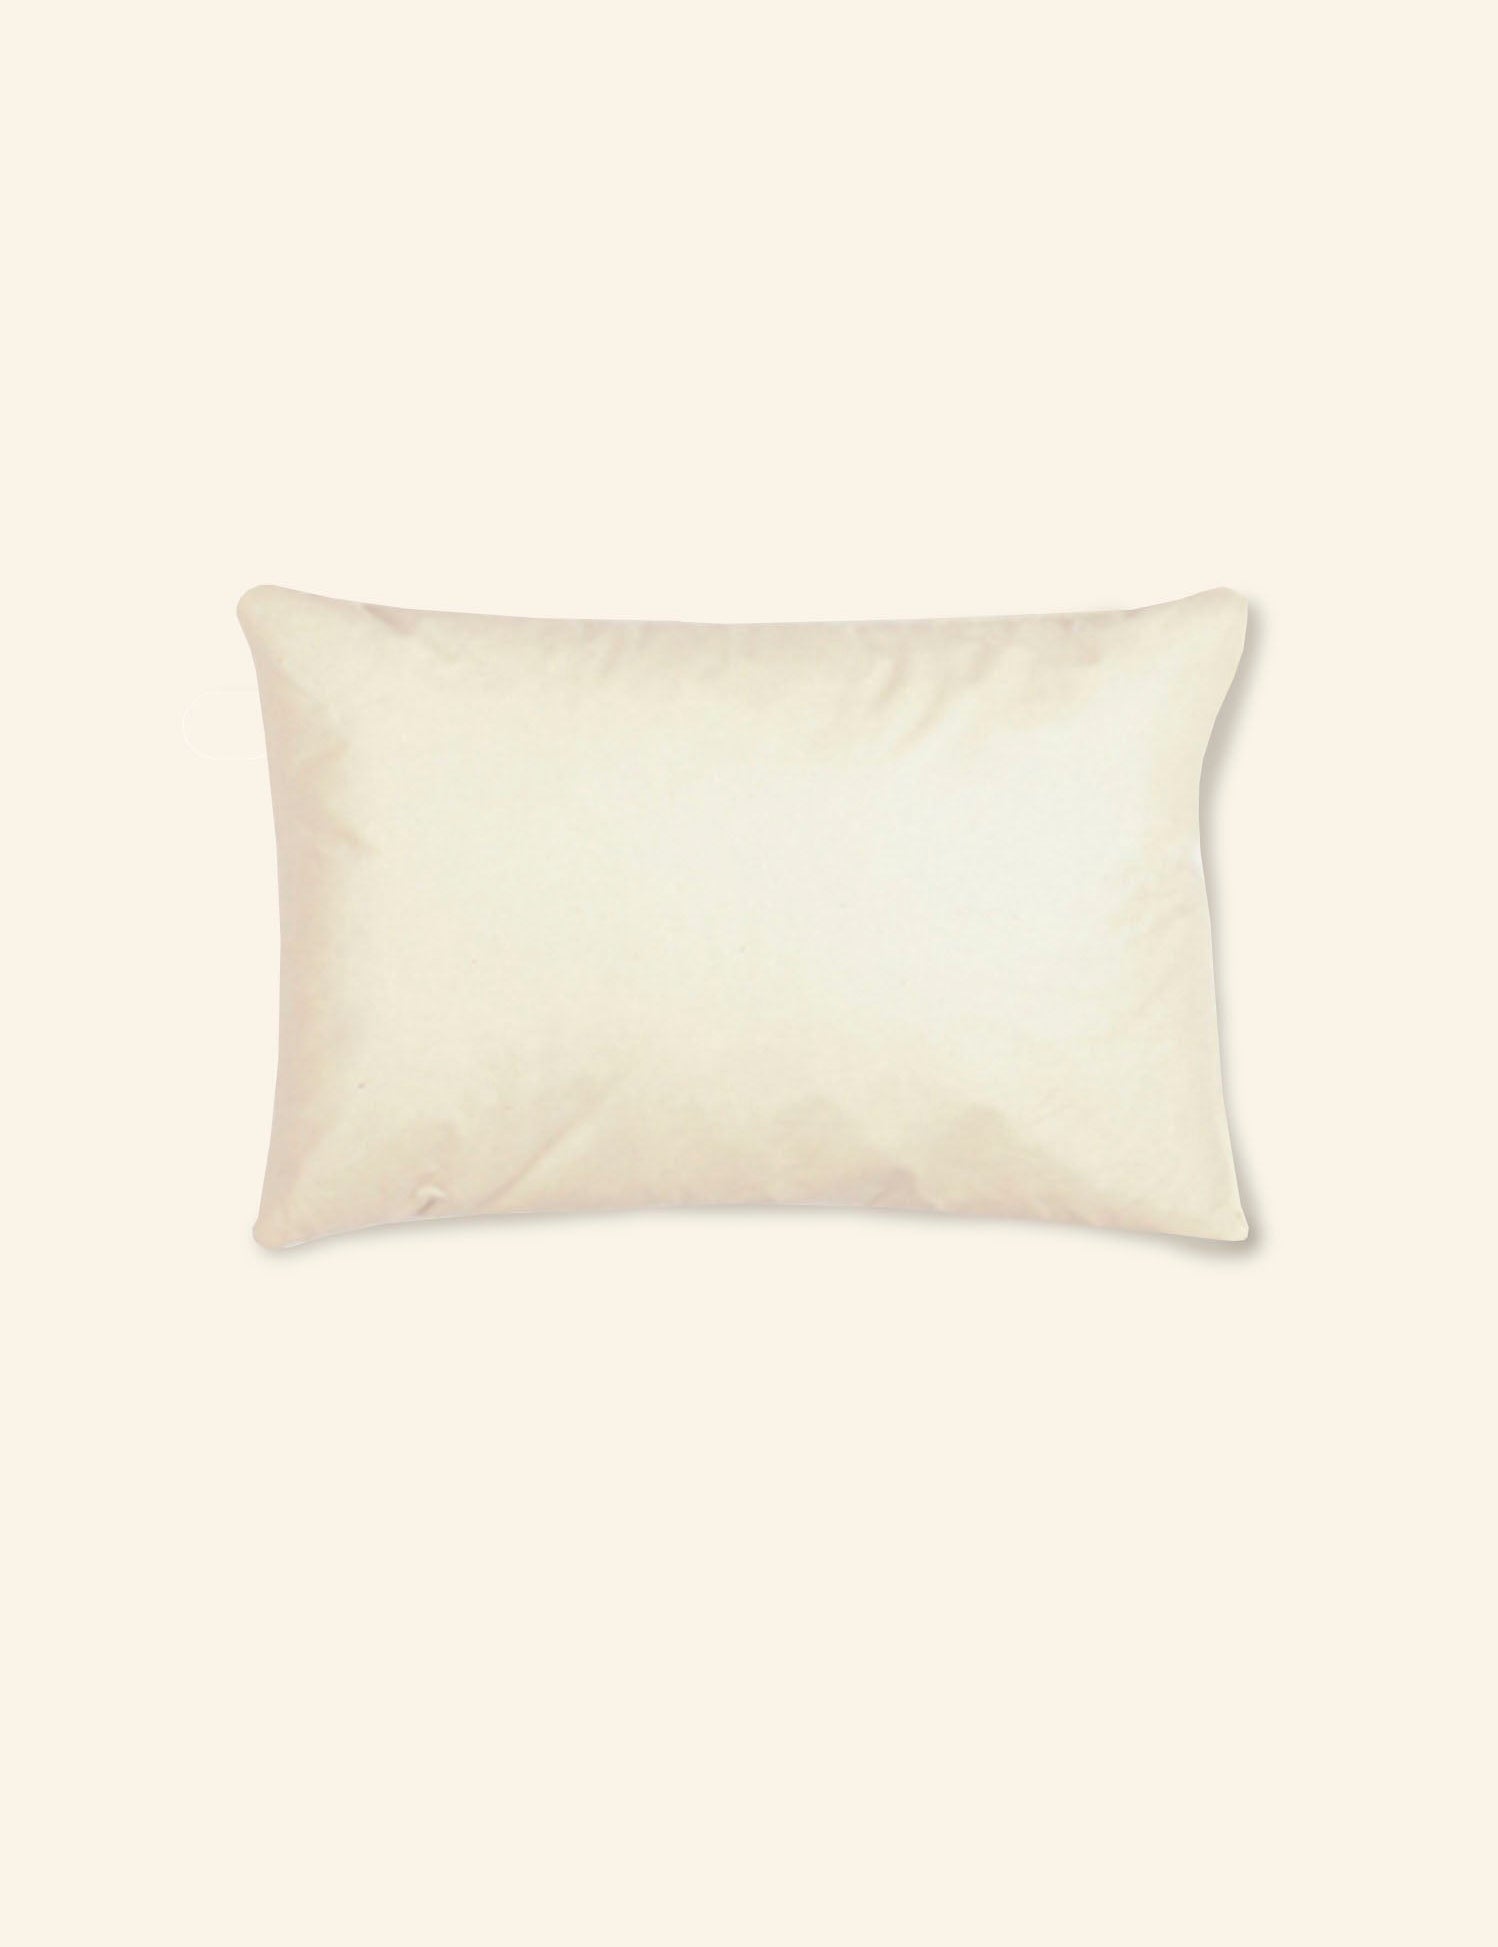 small-cushion-pad.jpg